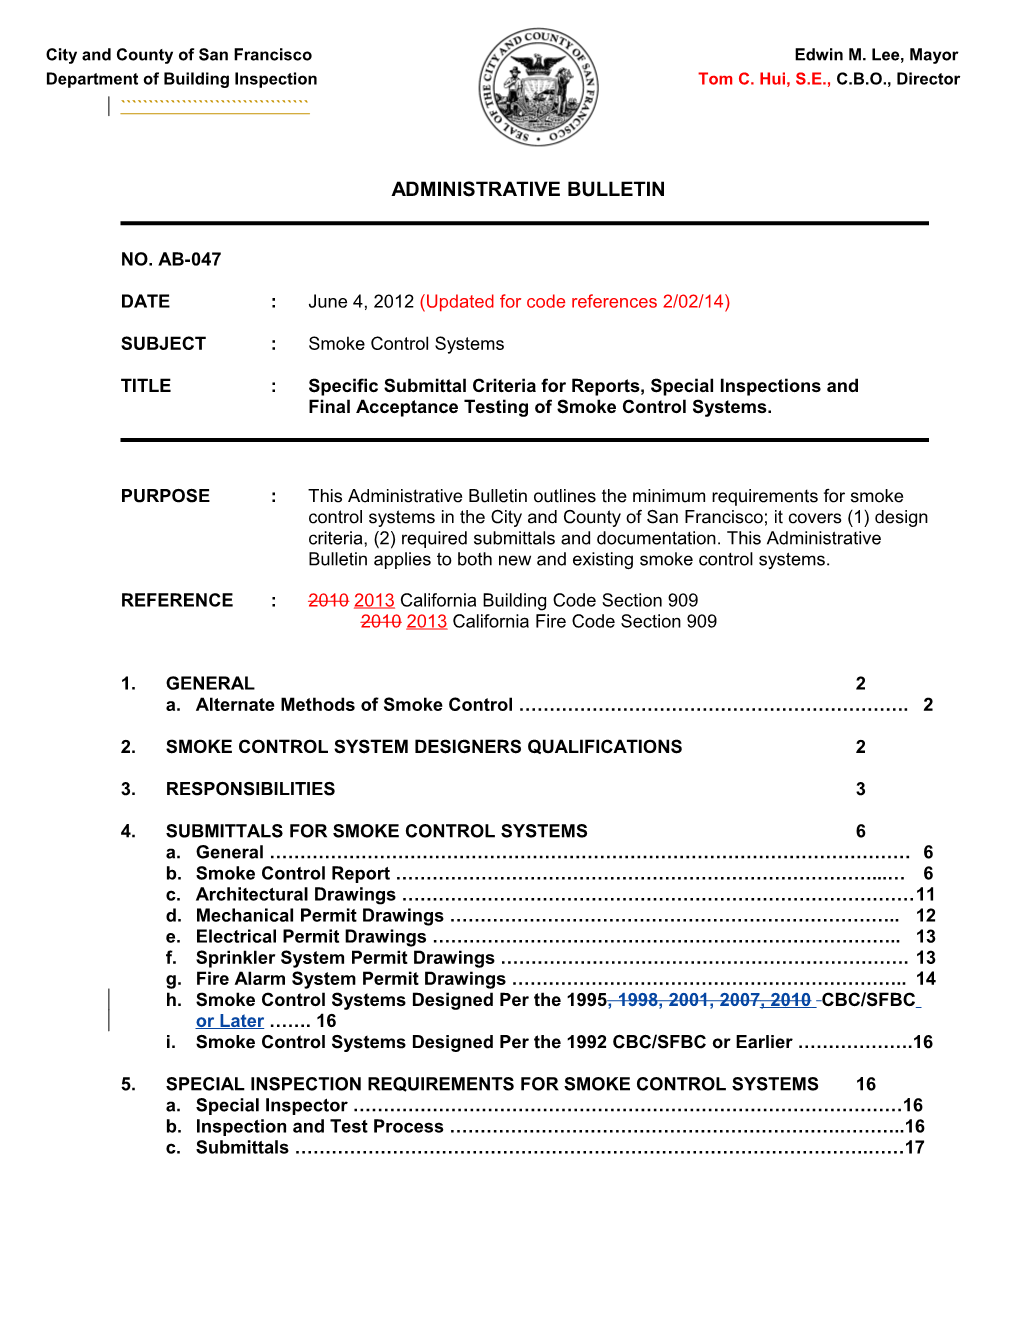 Administrative Bulletin Draft Outline